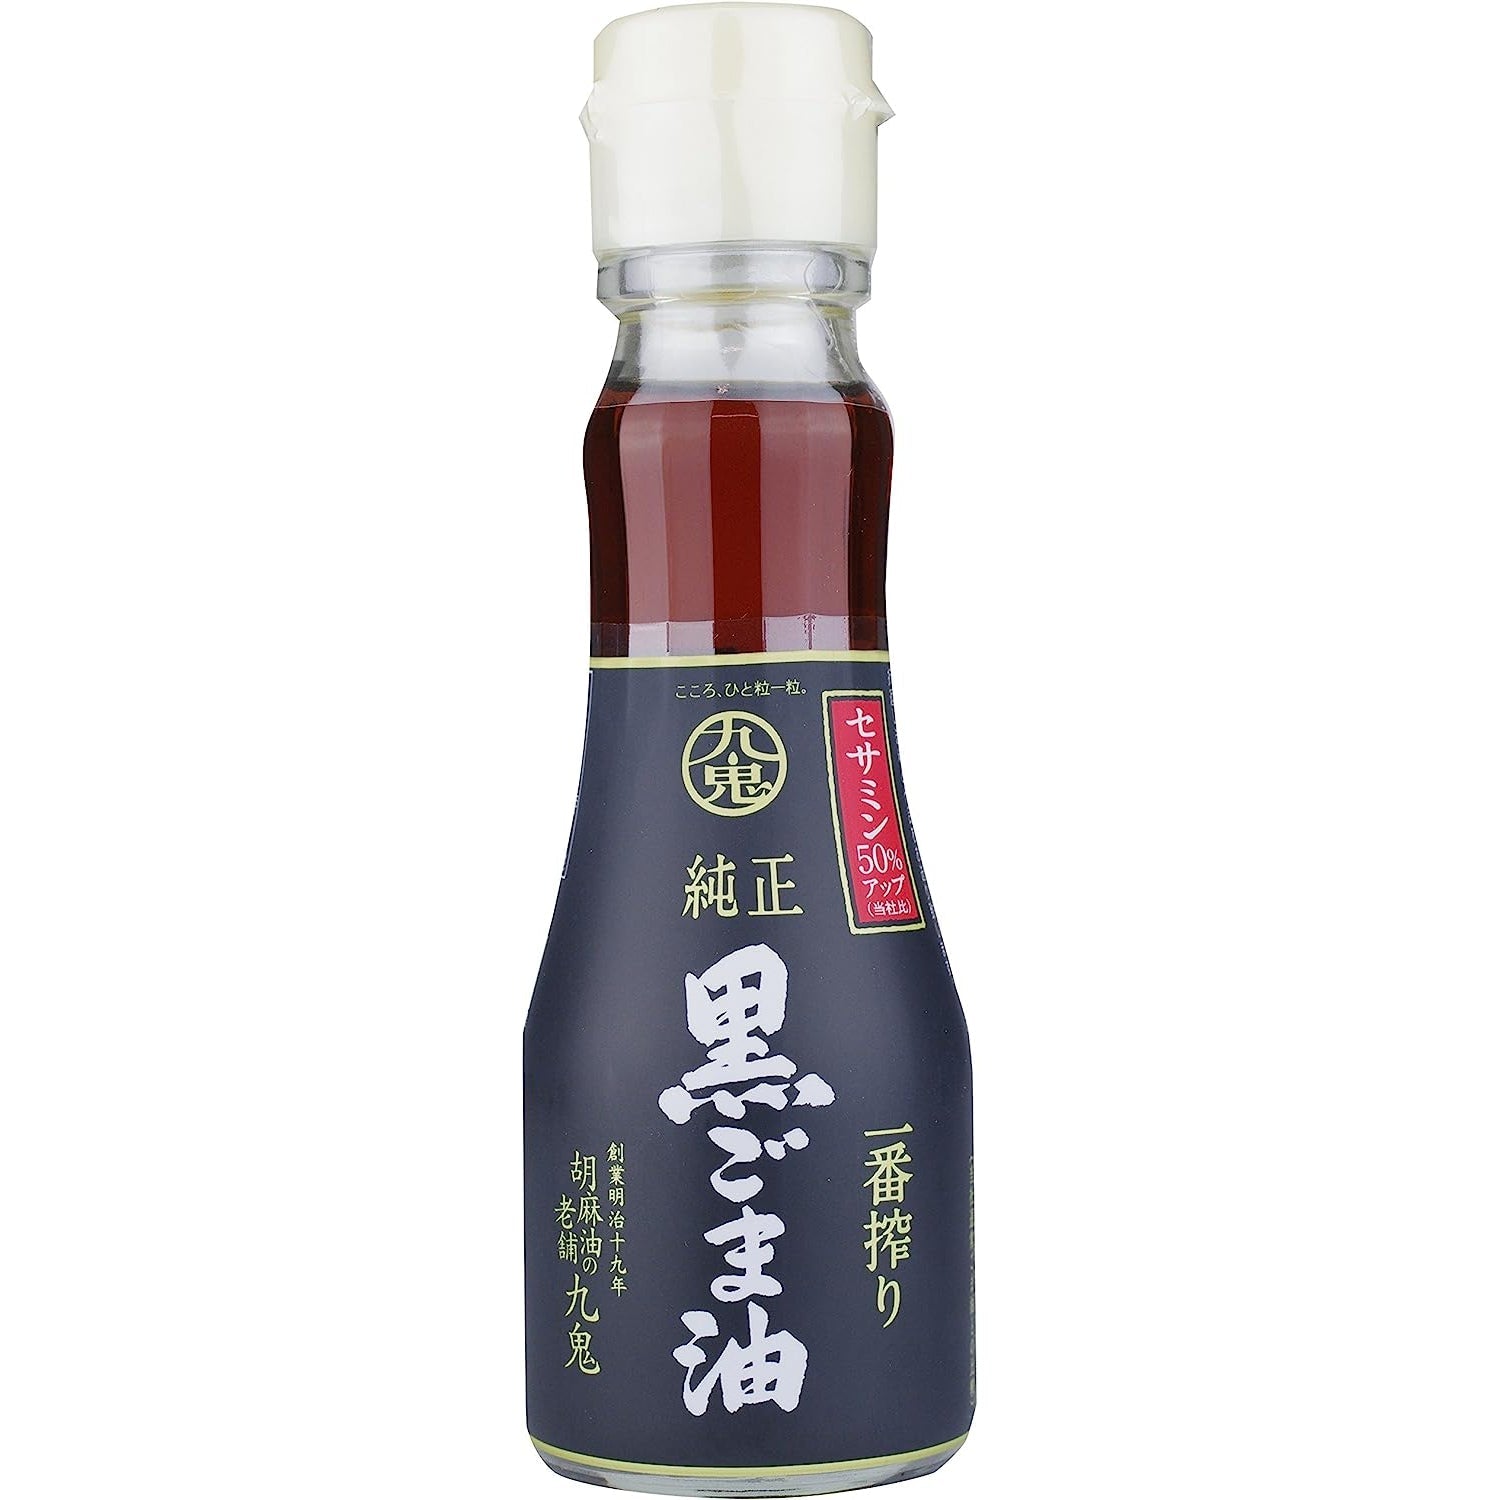 Kuki High Sesamin Pure Pressed Black Sesame Oil 150g, Japanese Taste